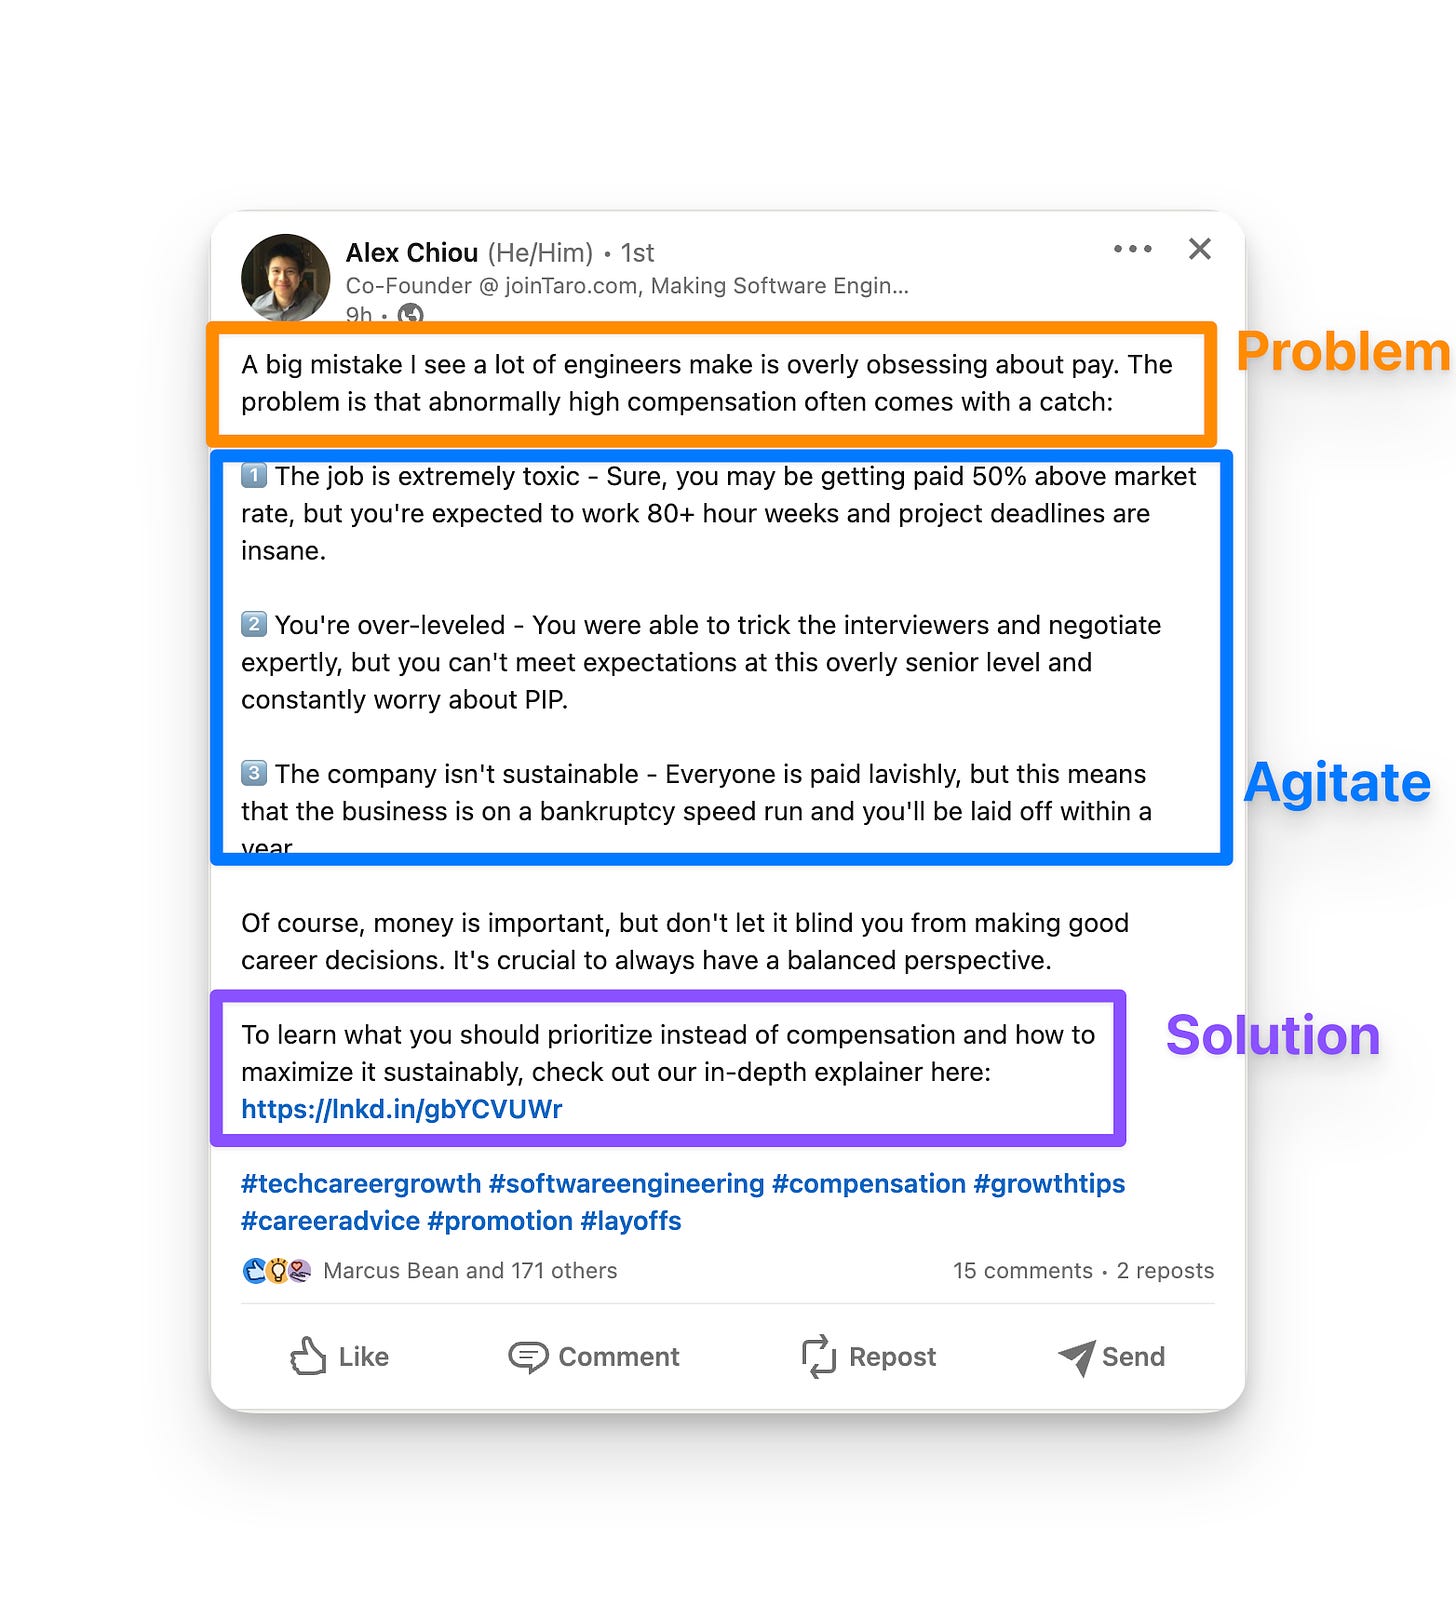 Alex Chiou LinkedIn post using Problem-Agitate-Solution format